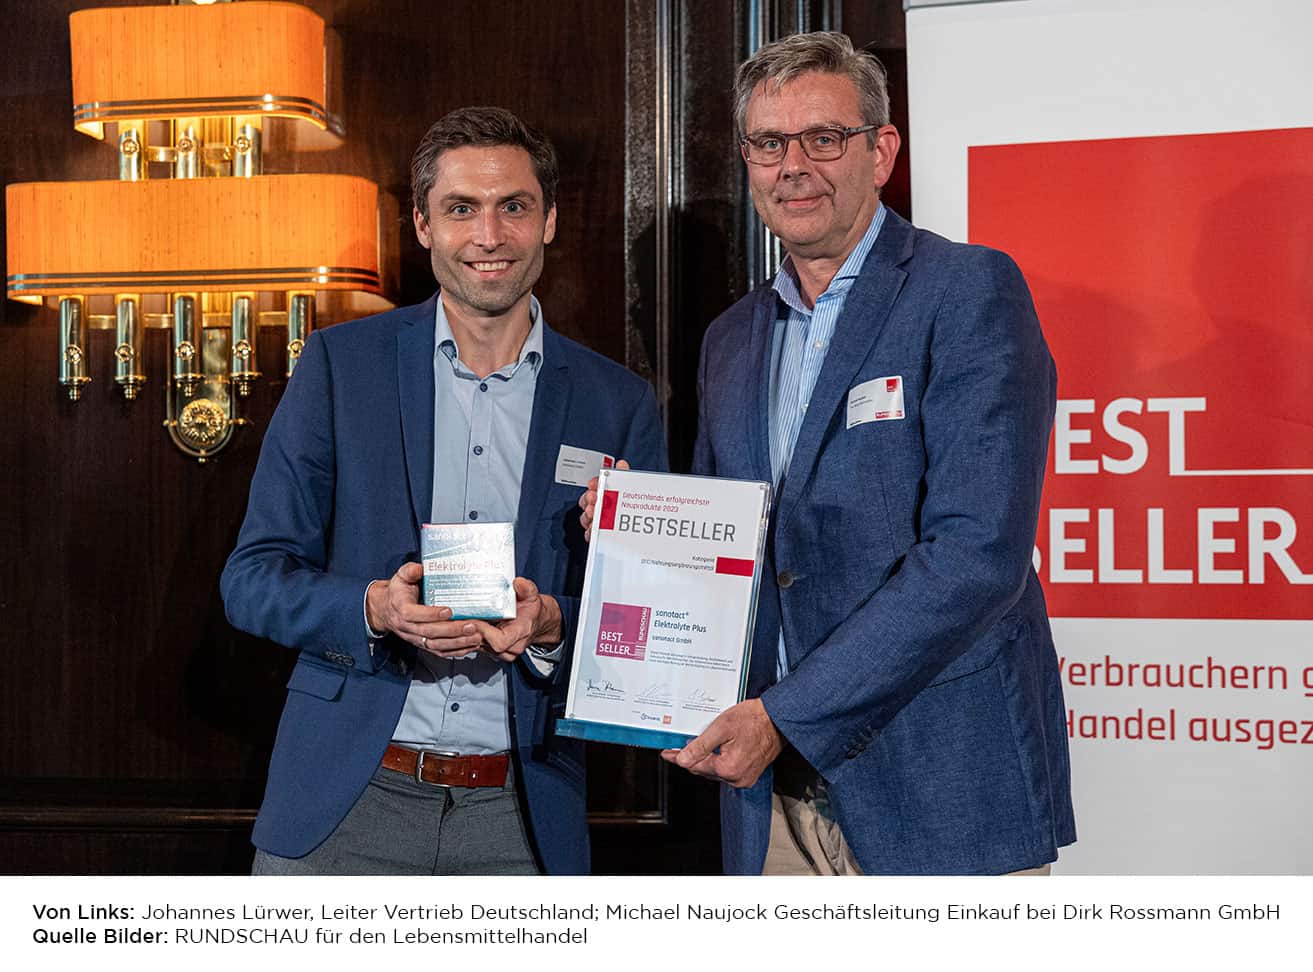 sanotact® Elektrolyte Plus erhält den BESTSELLER Award